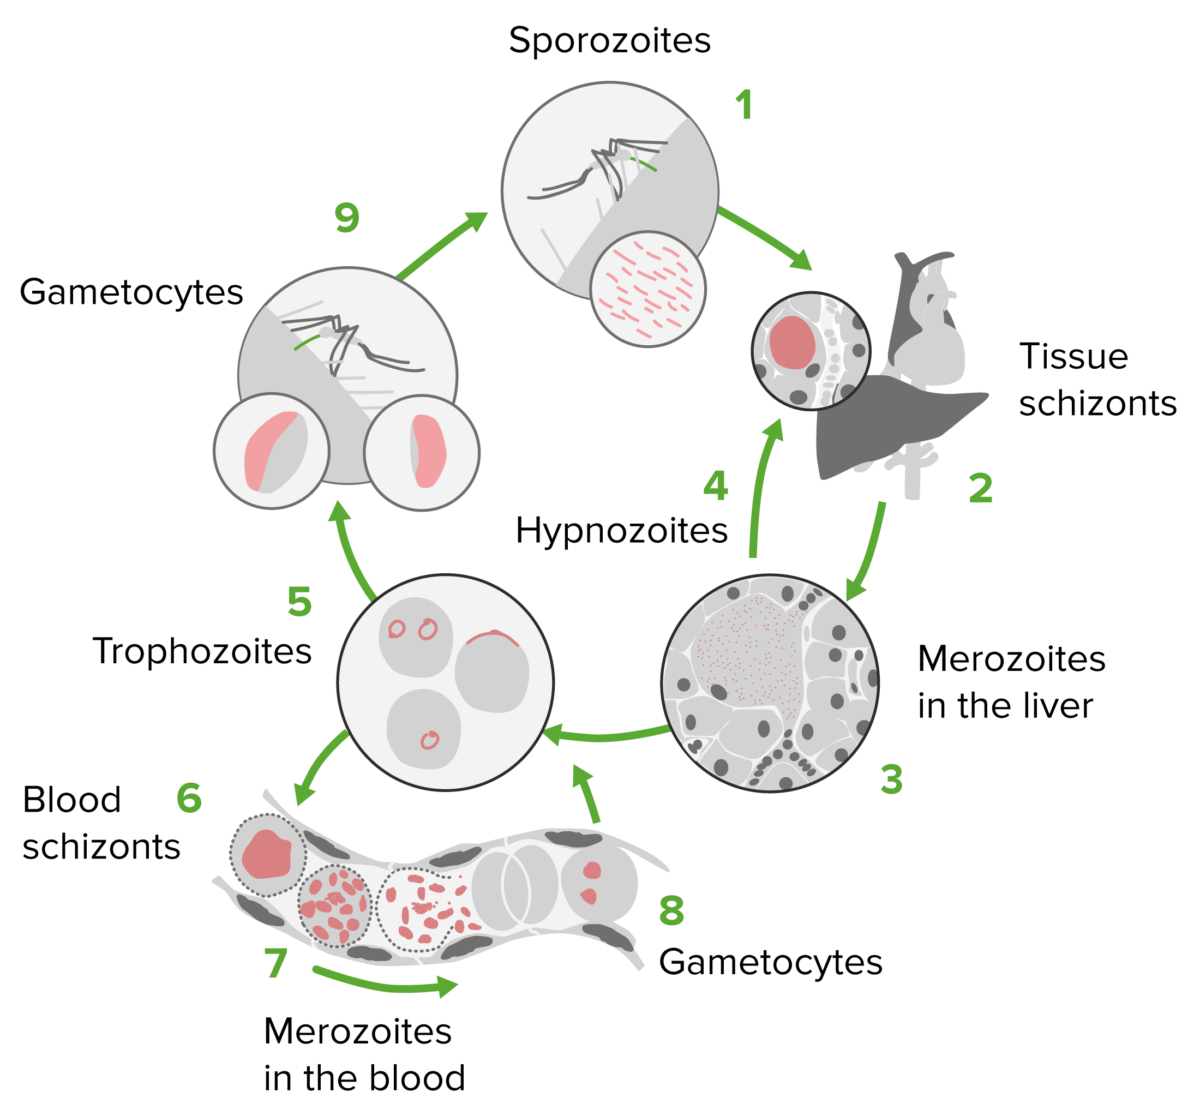 Plasmodium life cycle